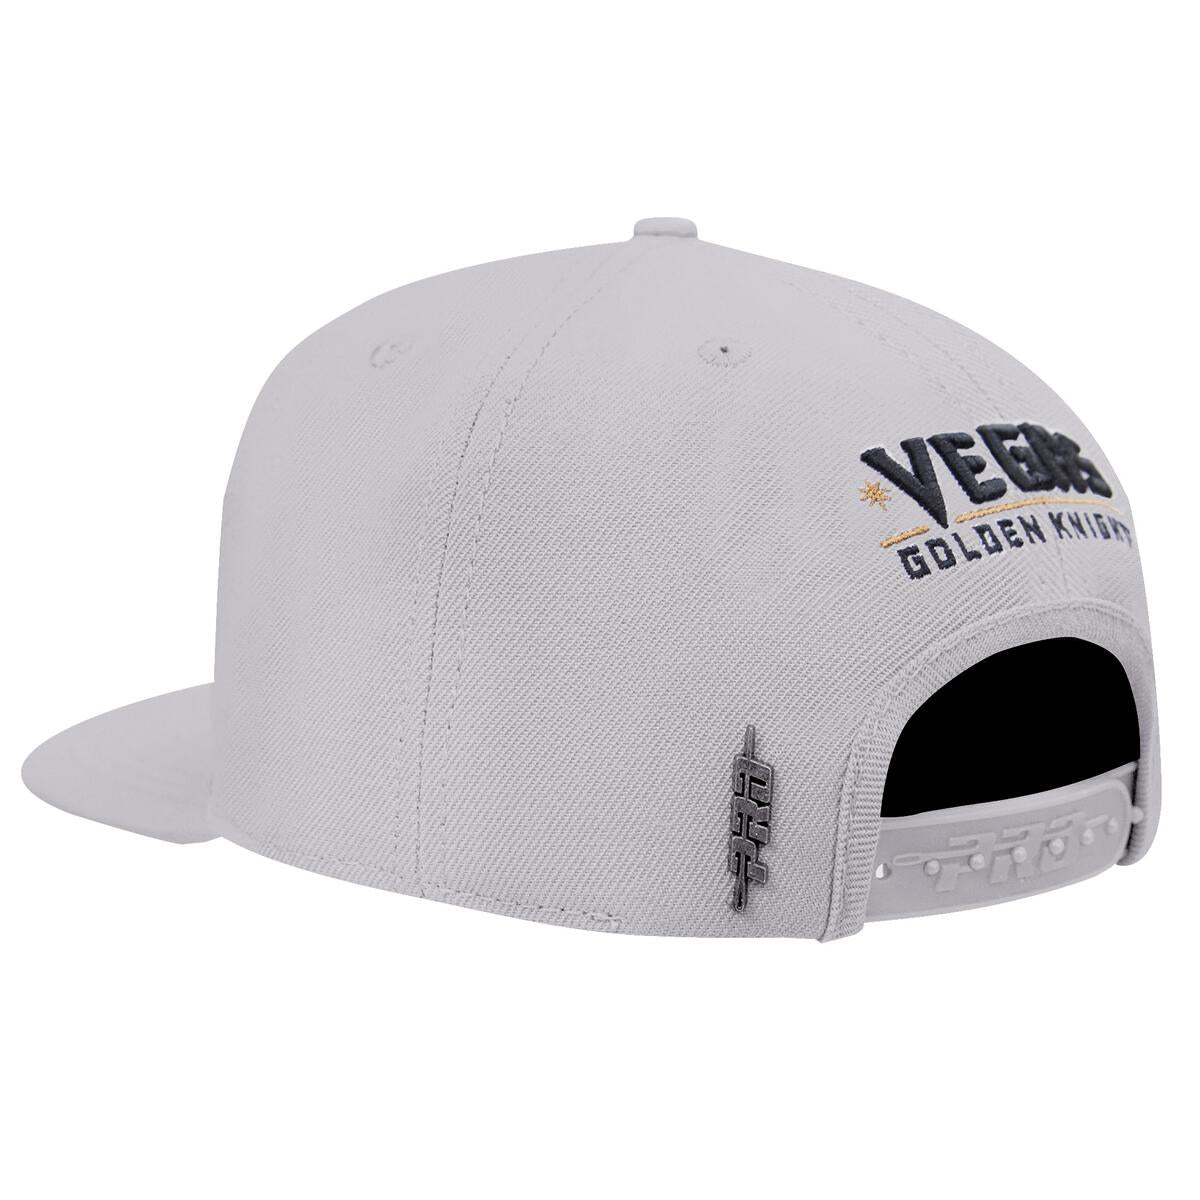 Pro Standard Vegas Golden Knights Wool Snapback Hat - Grey (HVG760213-GRY)